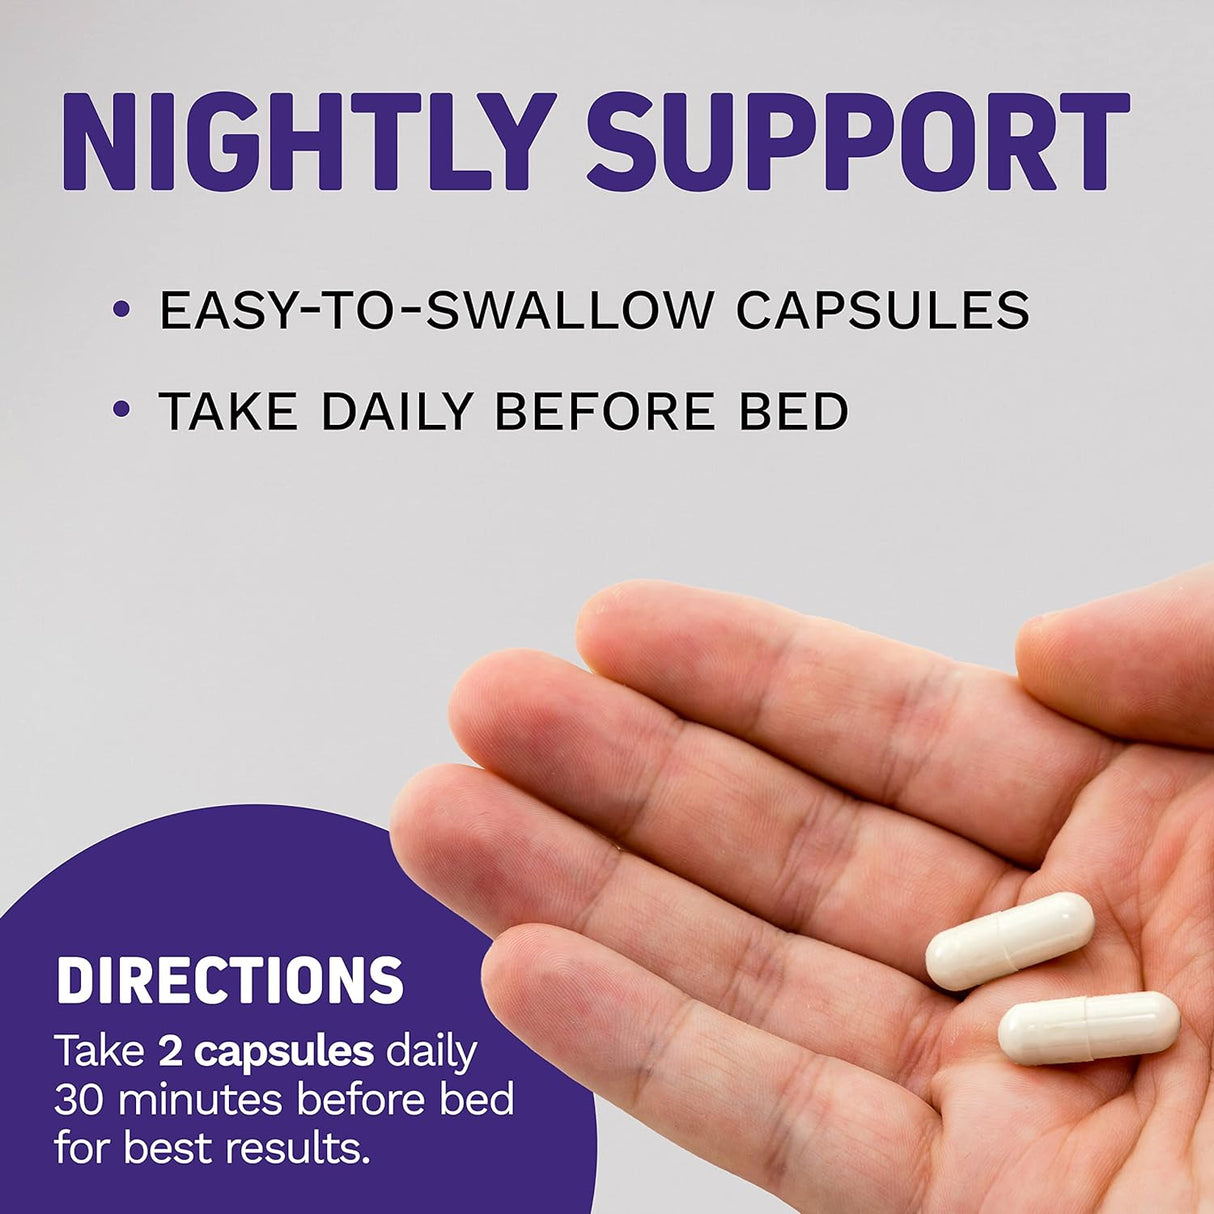 Keto Sleep Exogenous Ketones and Sleep Aids for Adults 60 Capsulas